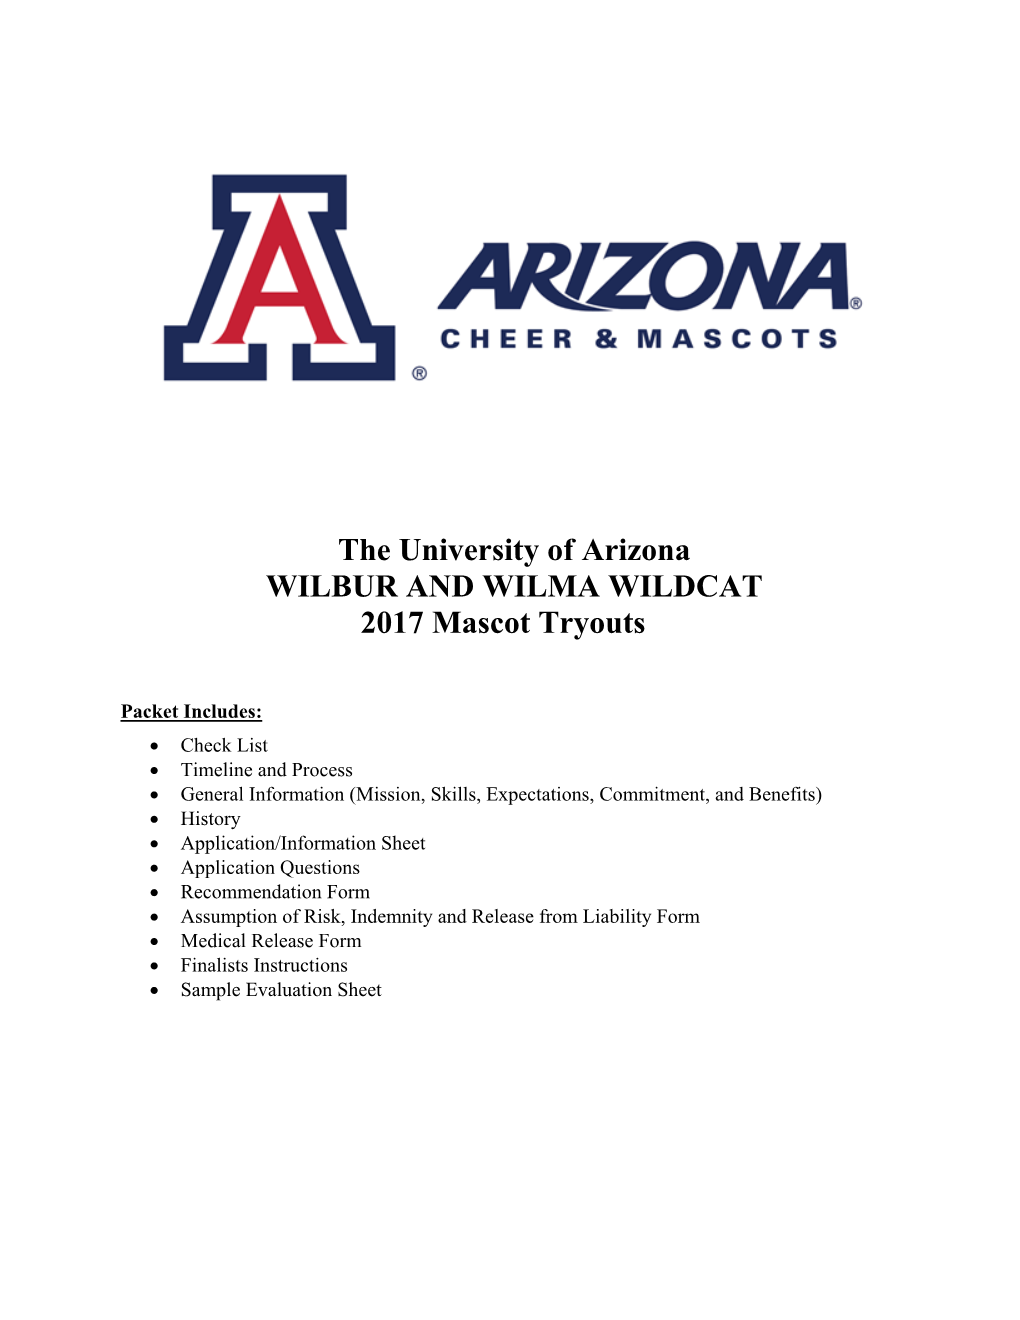 The University of Arizona WILBUR and WILMA WILDCAT 2017 Mascot Tryouts